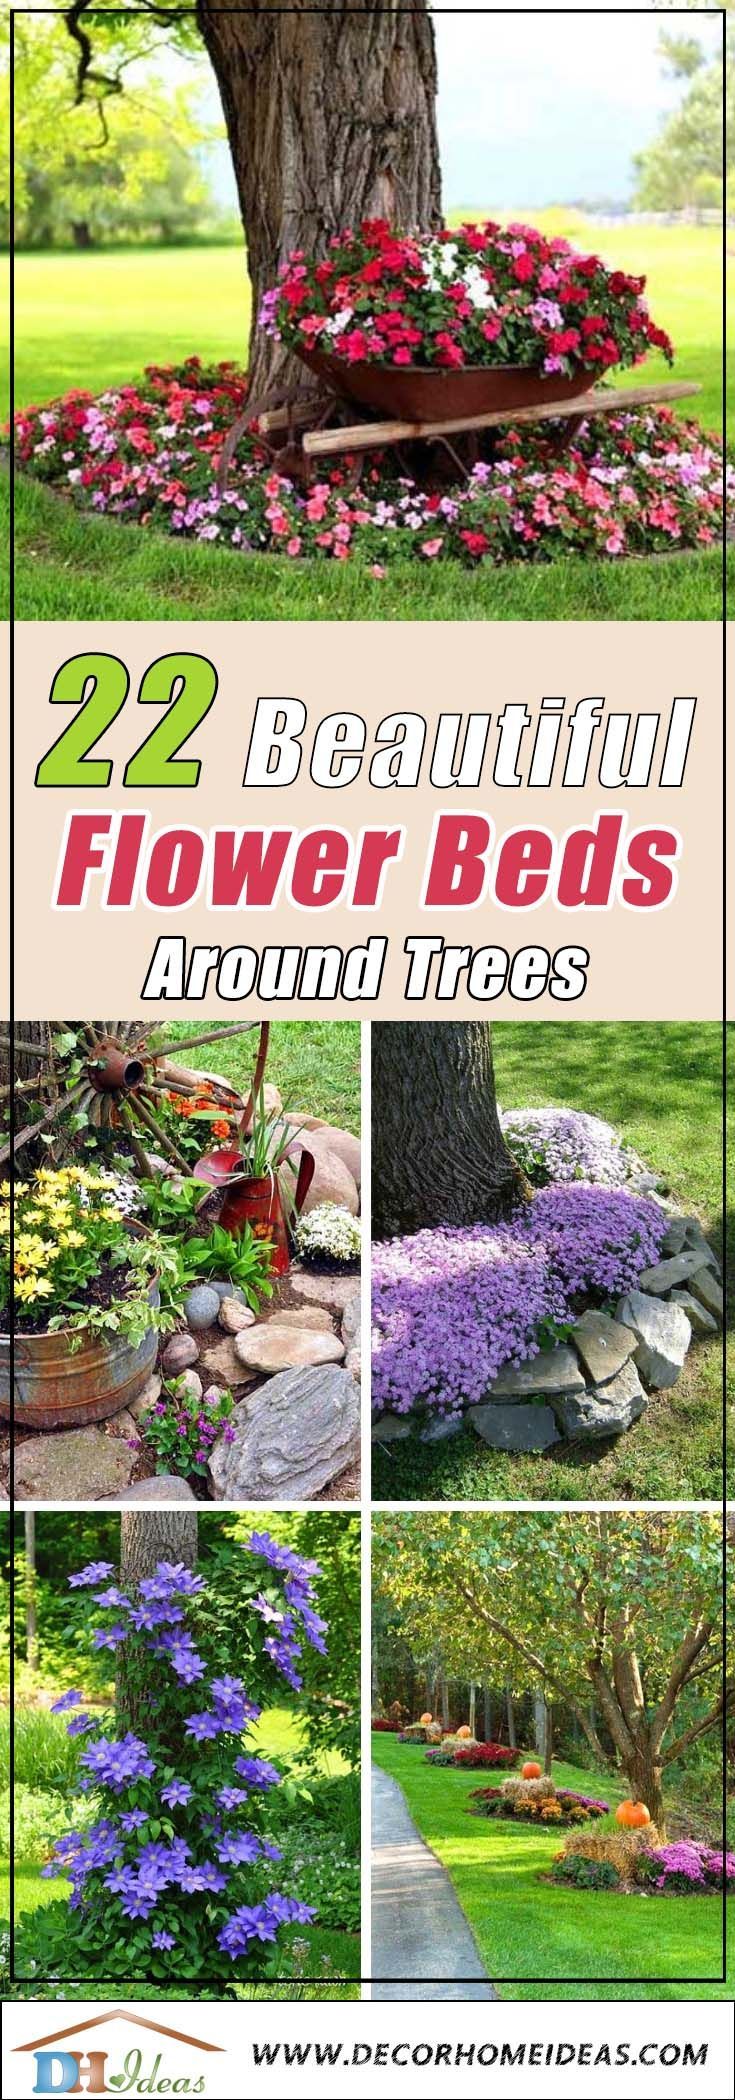 22 Beautiful Flower Beds Around Trees -   20 plants Flowers around trees ideas